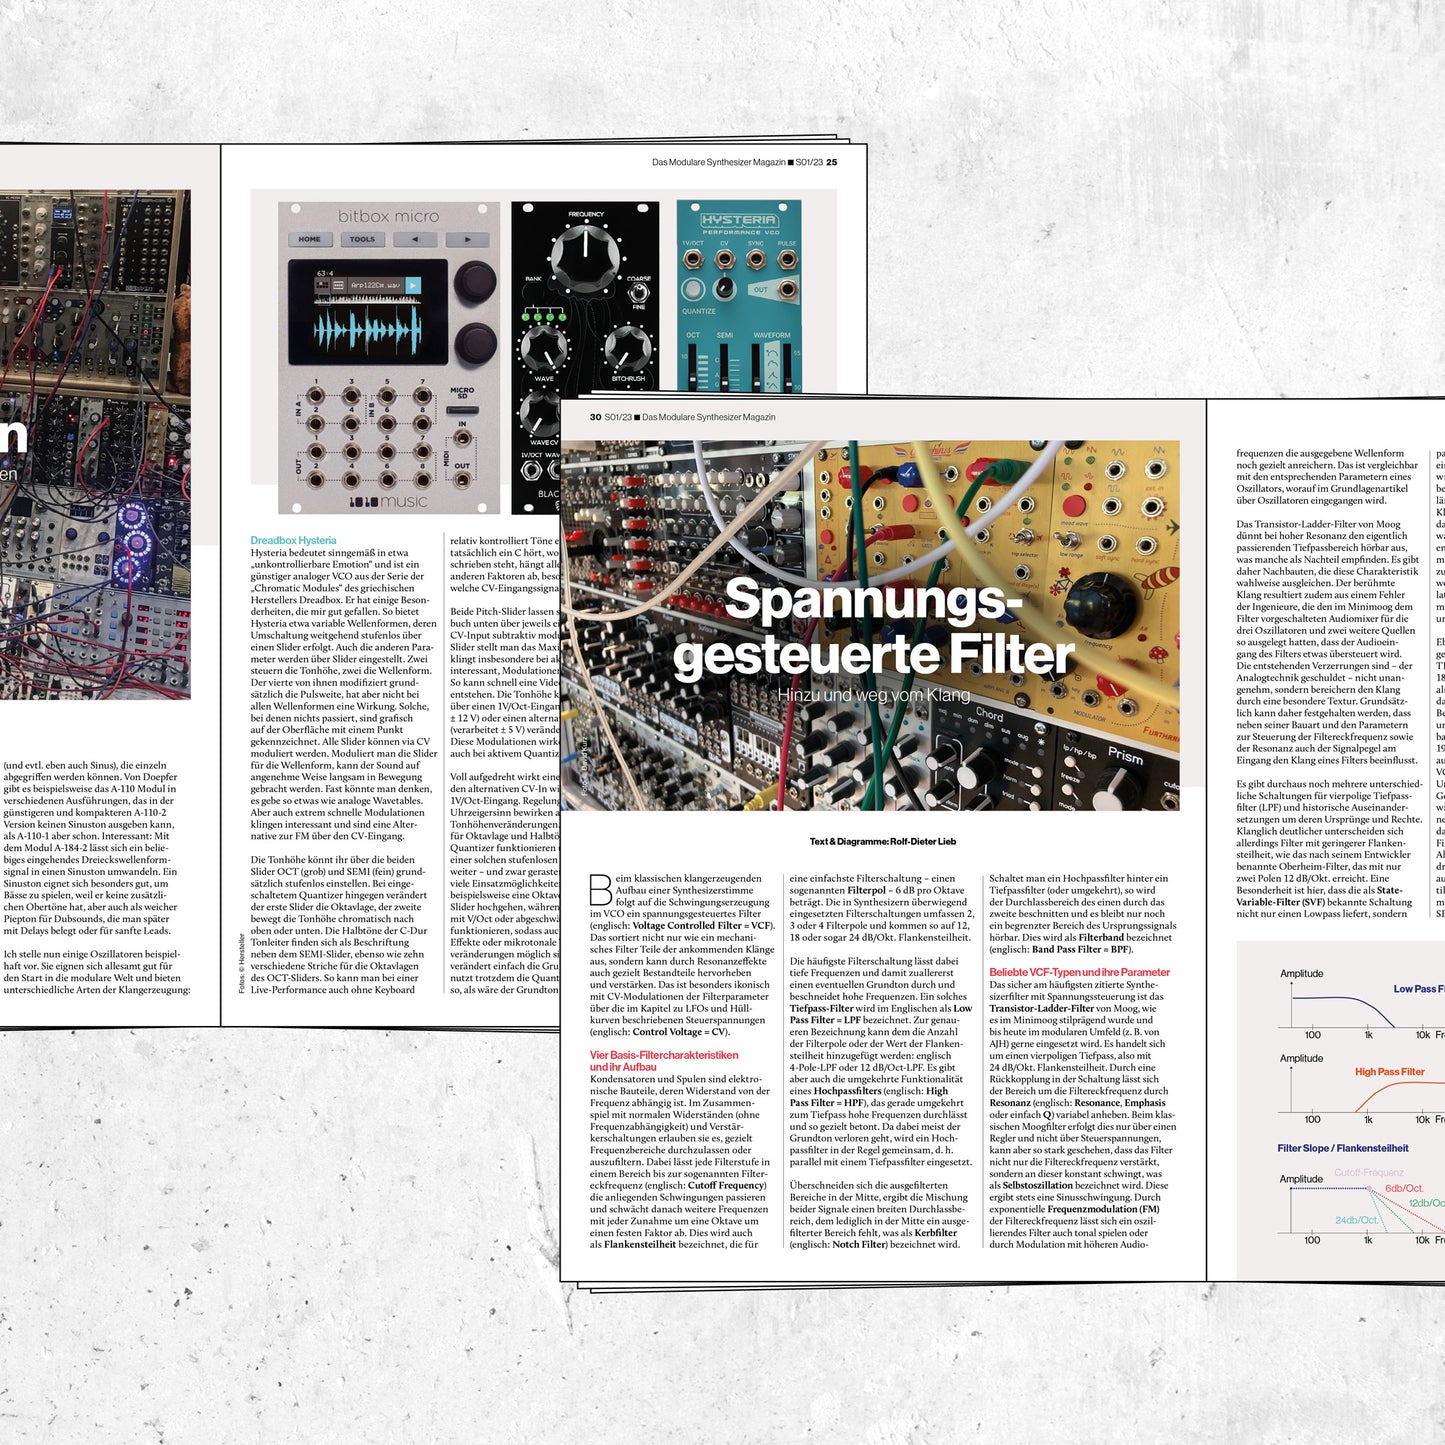 Sonderausgabe | Das Modulare Synthesizer Magazin | epaper